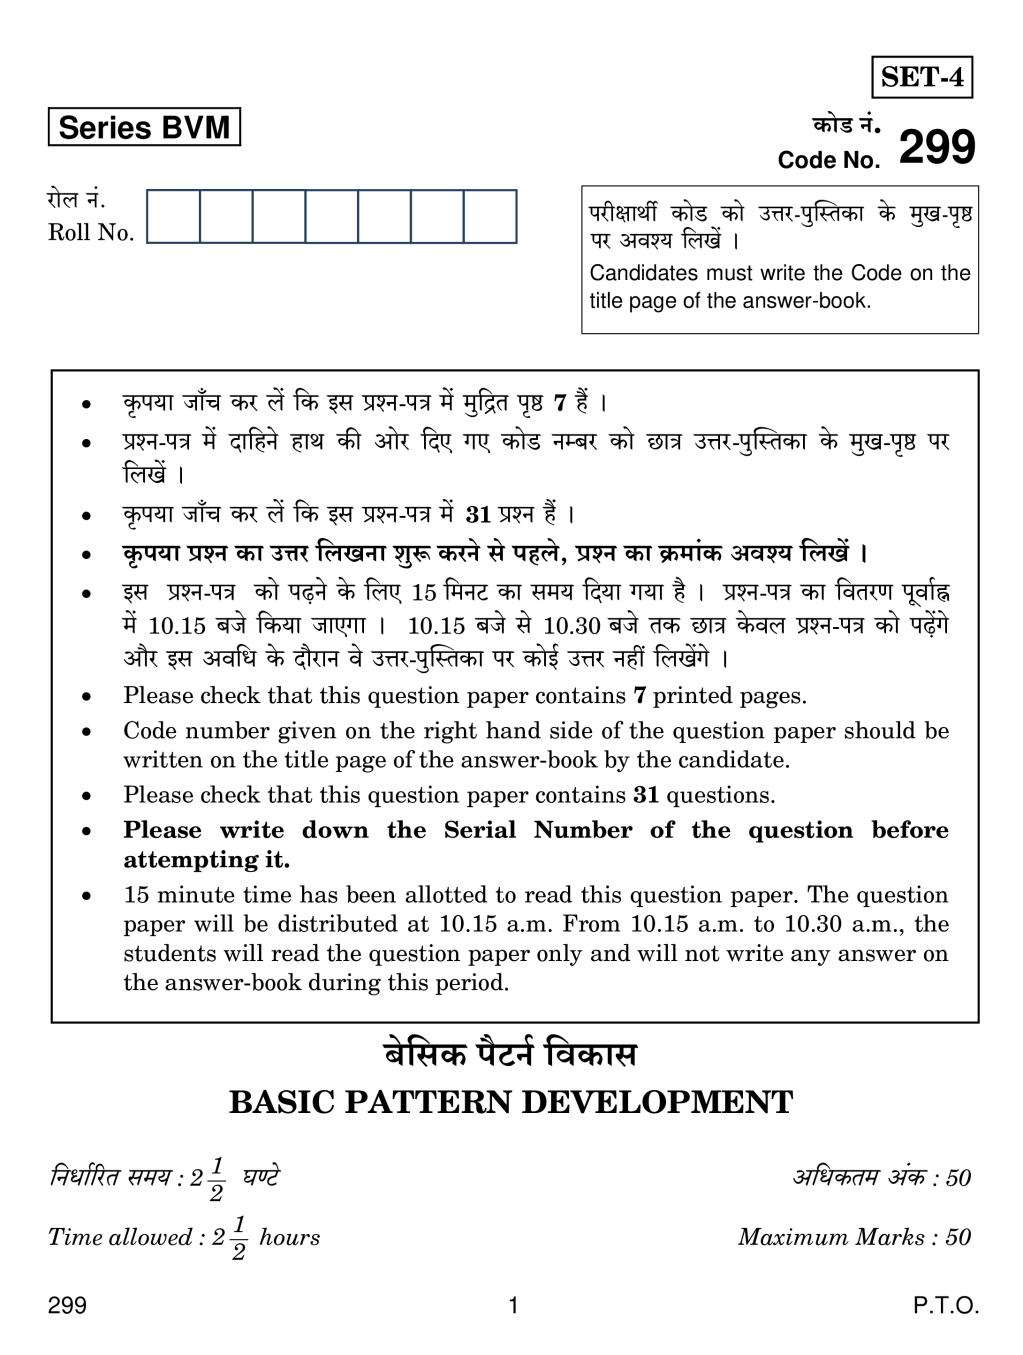 CBSE Class 12 Basic Pattern Development Question Paper 2019 - Page 1